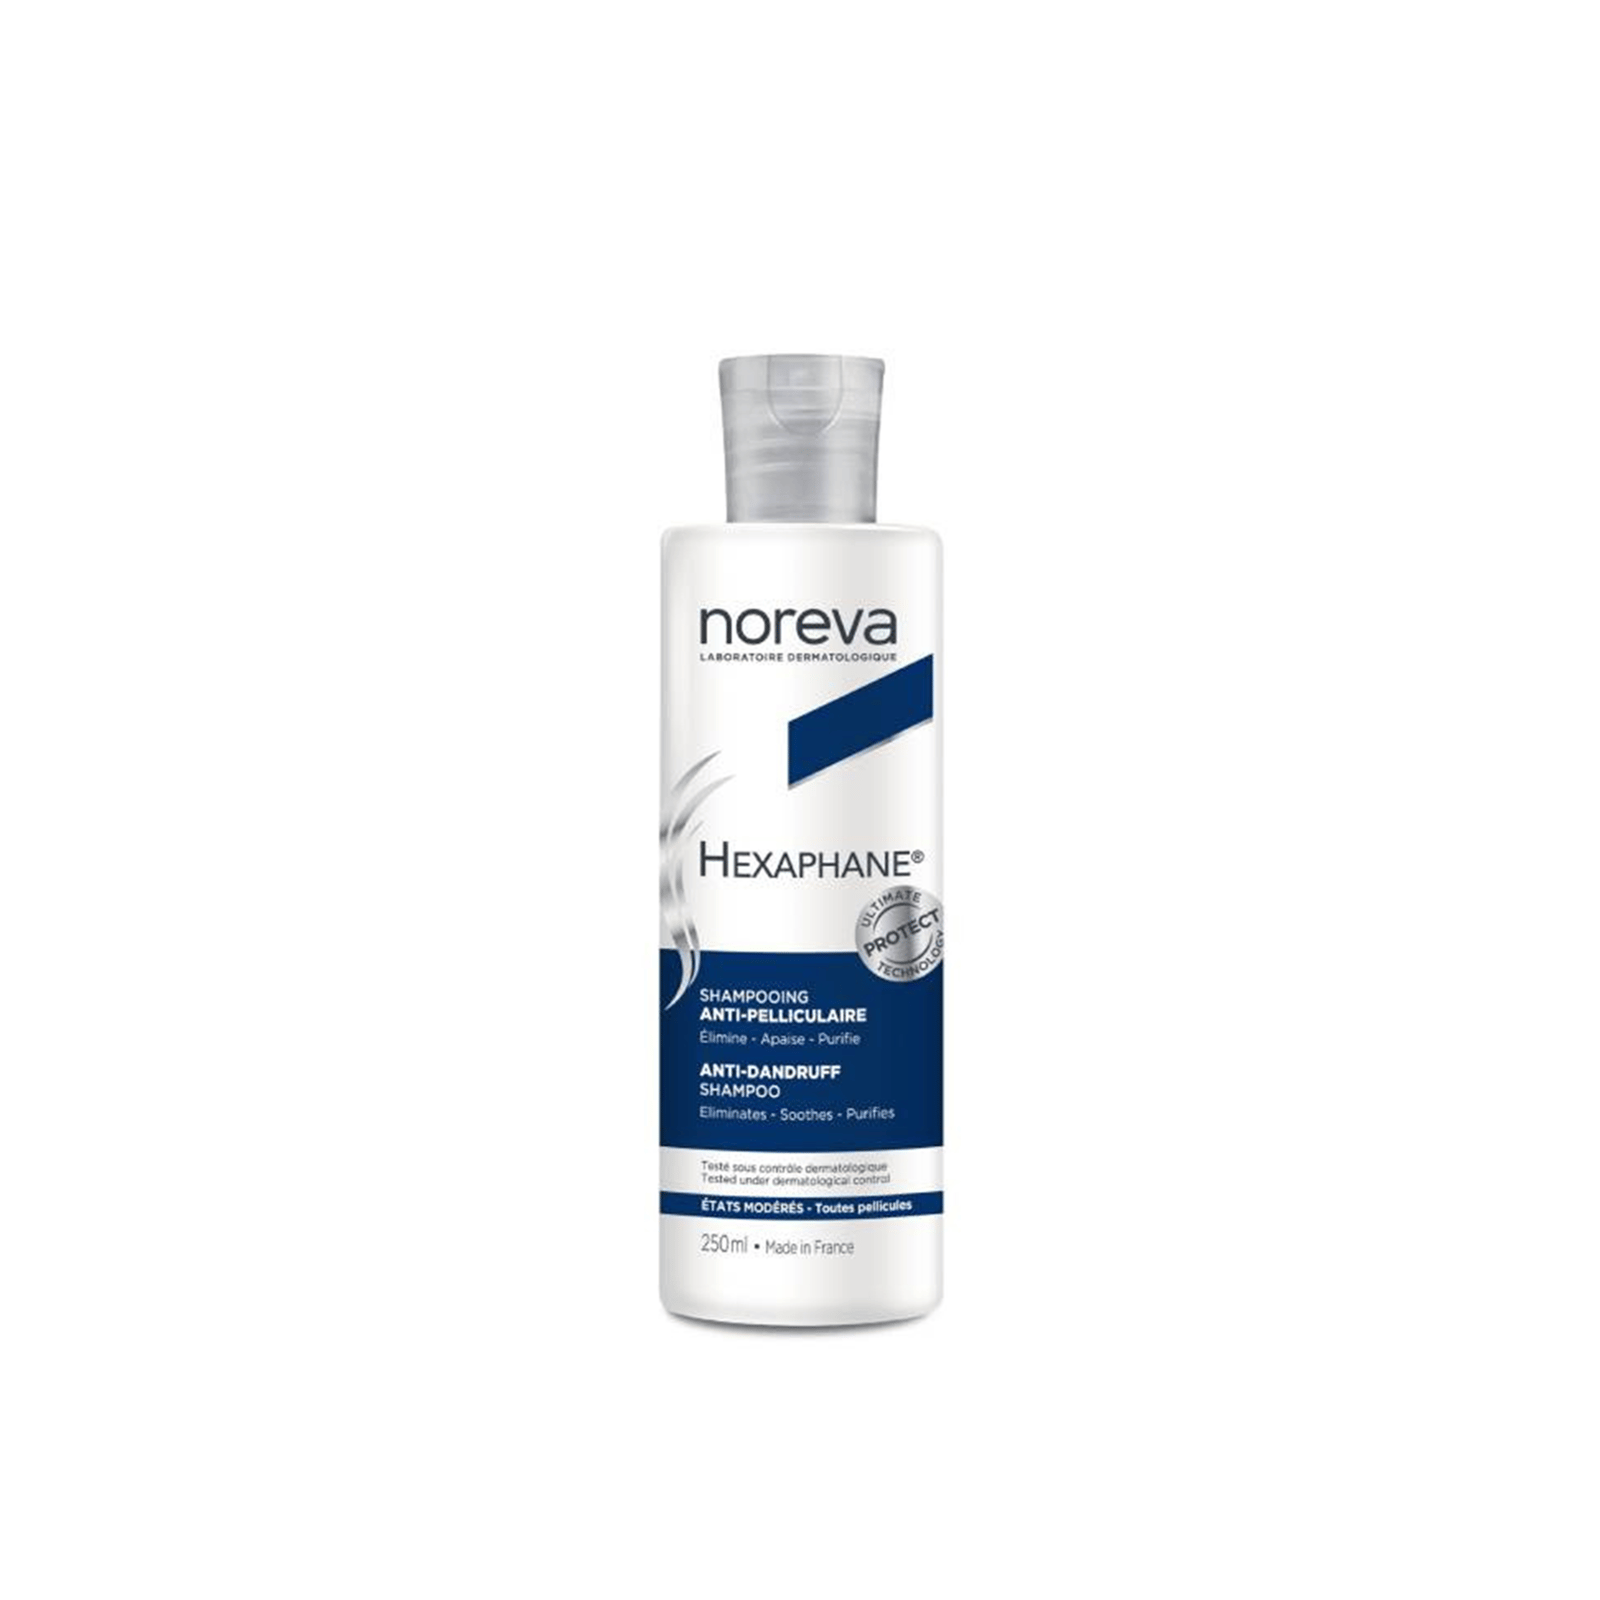 Noreva Hexaphane Anti-Dandruff Shampoo 250ml (8.5 fl oz)